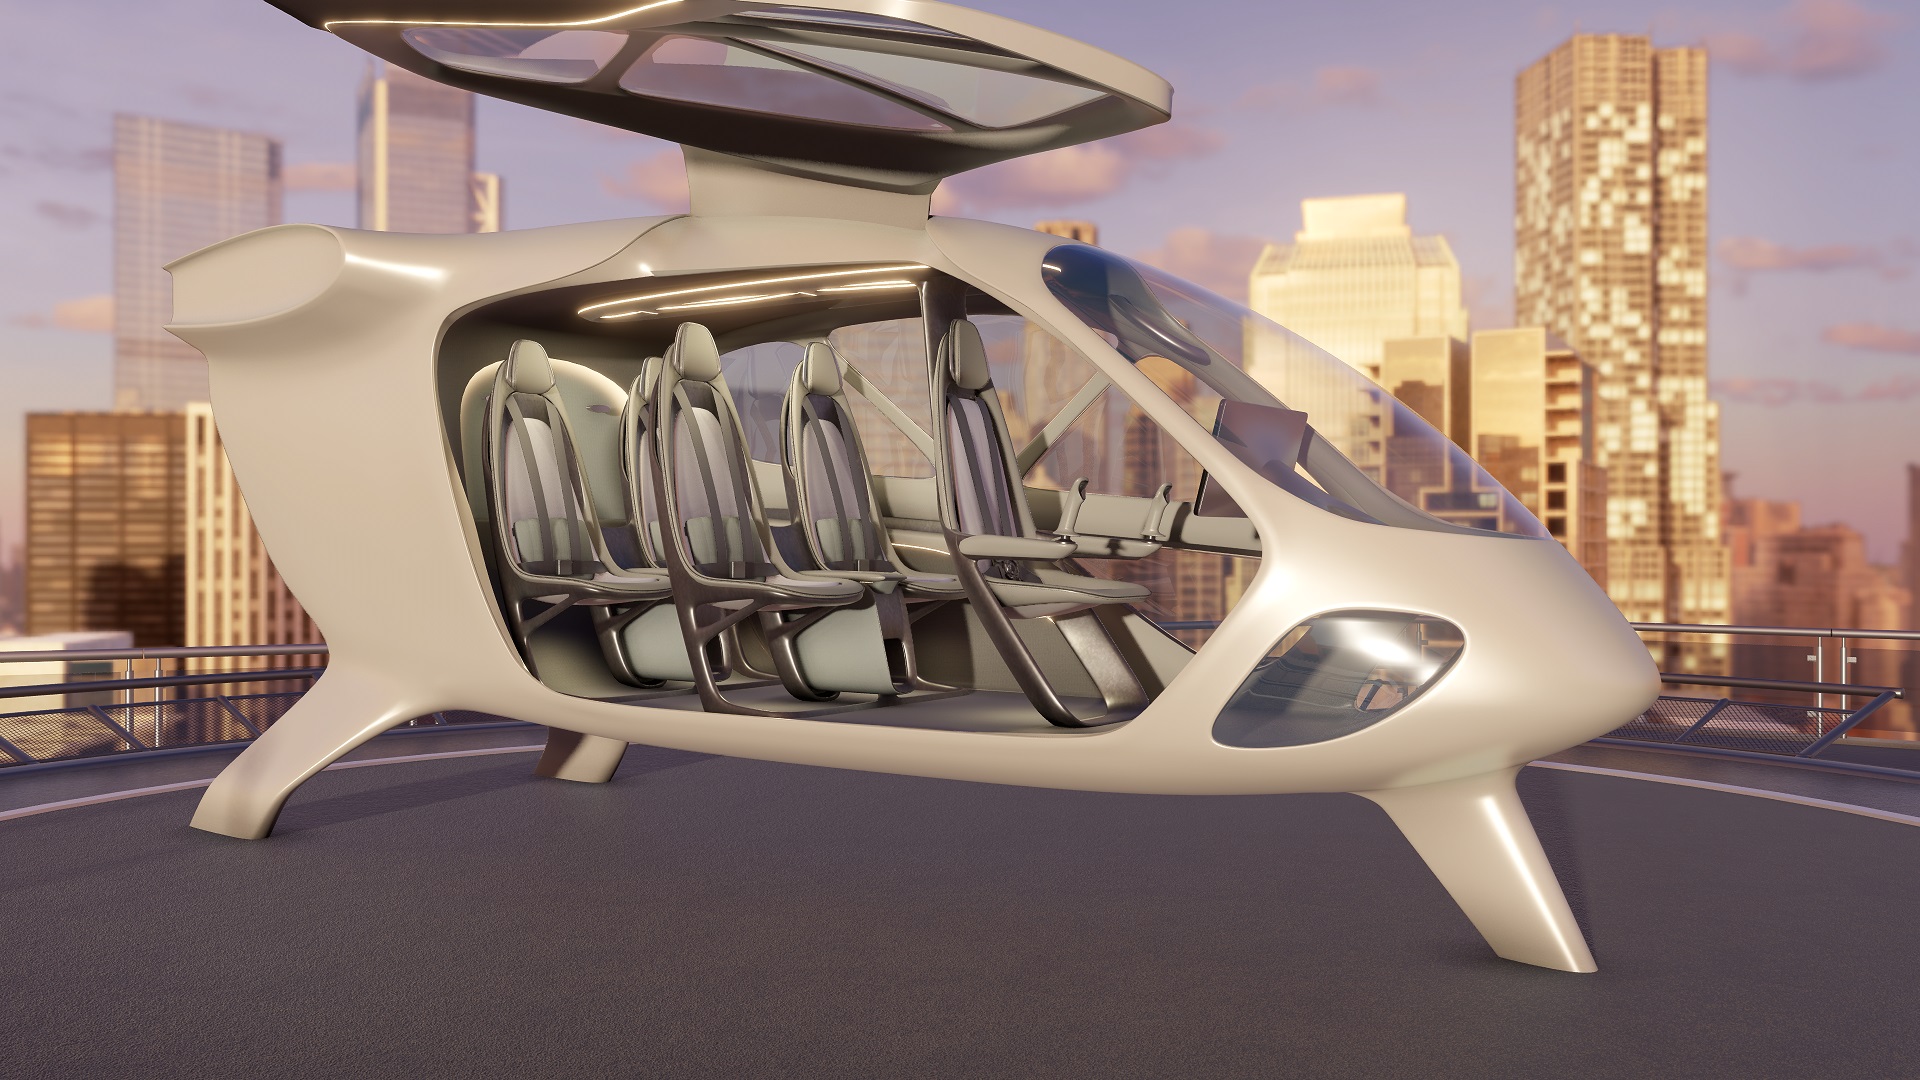 Hyundai Motor Group’s Supernal Unveils eVTOL Vehicle Cabin Concept at 2022 Farnborough International Airshow